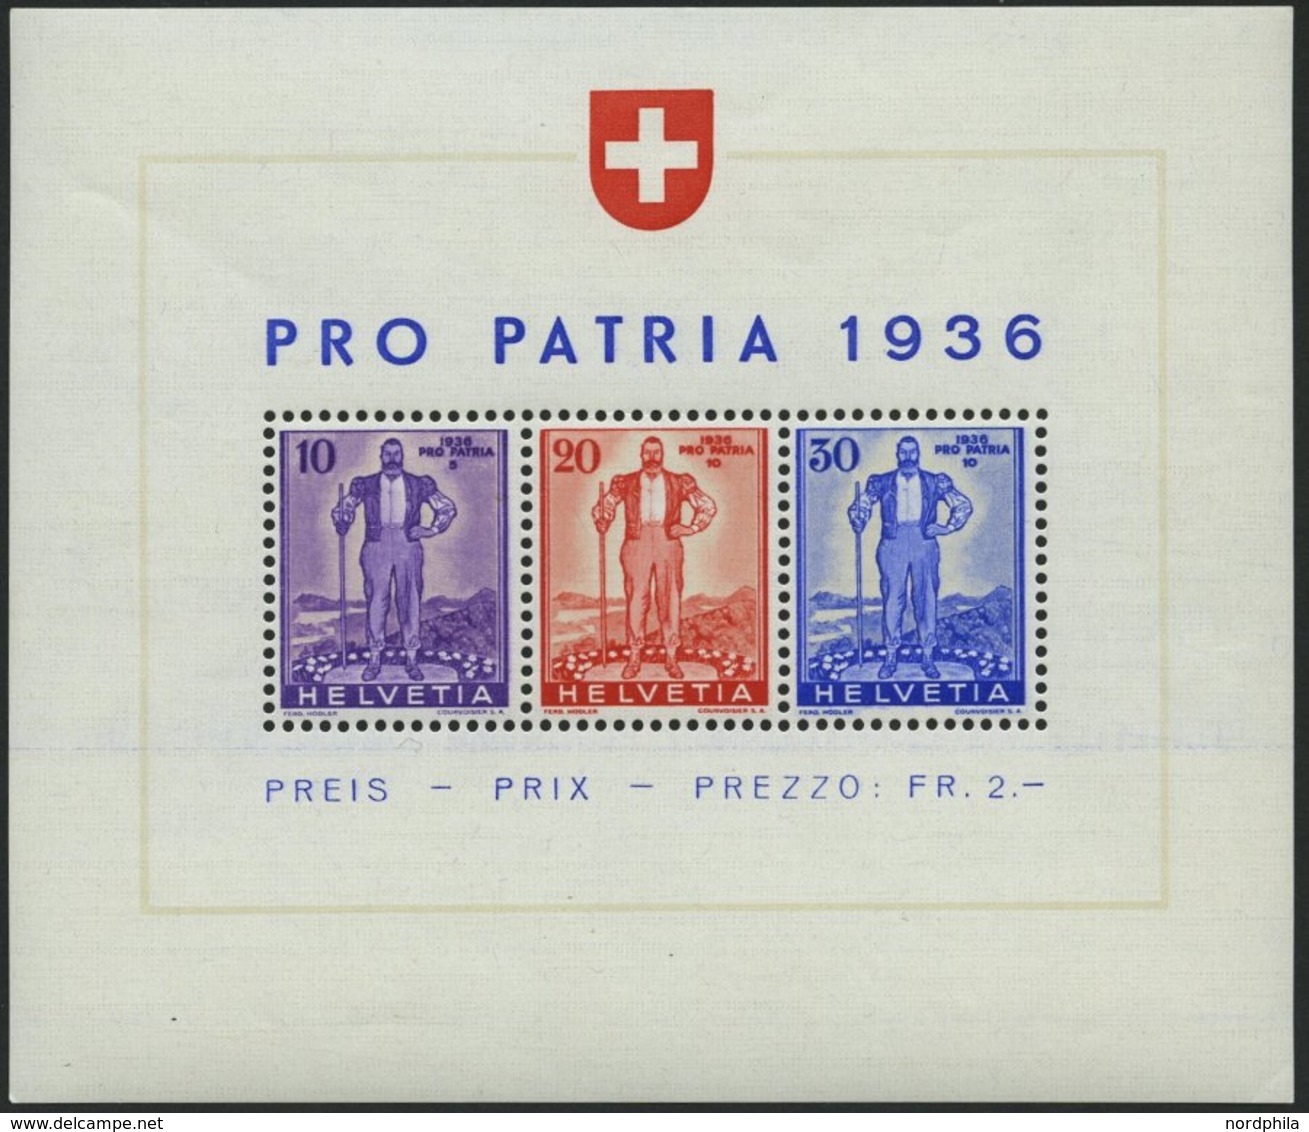 SCHWEIZ BUNDESPOST Bl. 2 **, 1936, Block Pro Patria, Winziger Eckbug Sonst Pracht, Mi. 75,- - 1843-1852 Poste Federali E Cantonali